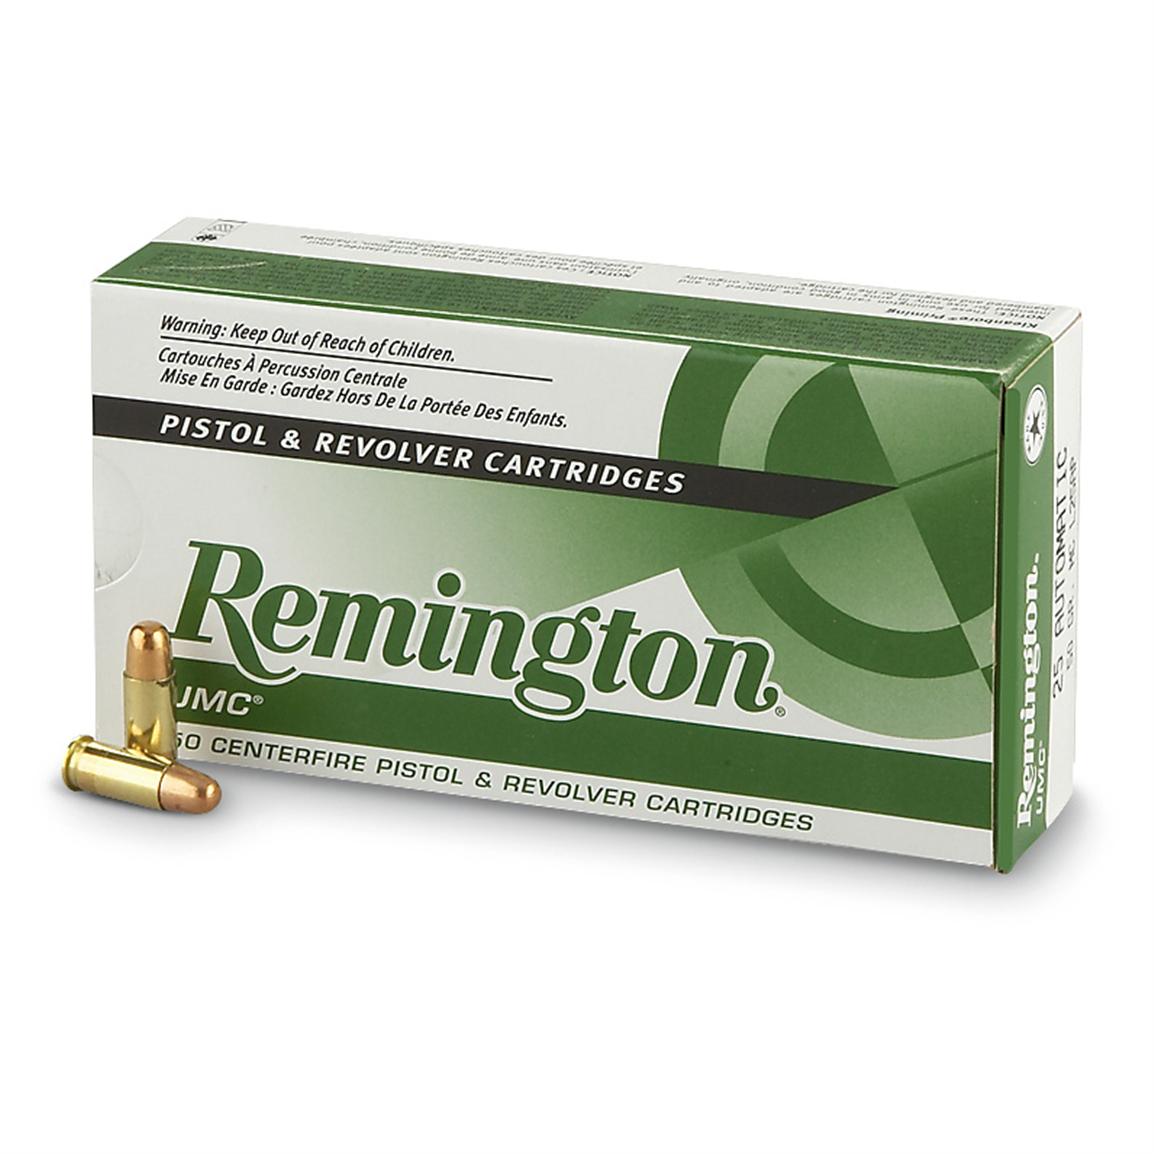 Remington UMC Handgun .38 Super Auto (+P) 130 Grain MC 500 rounds - $379.99 (All Club Orders $49+ Ship FREE!)